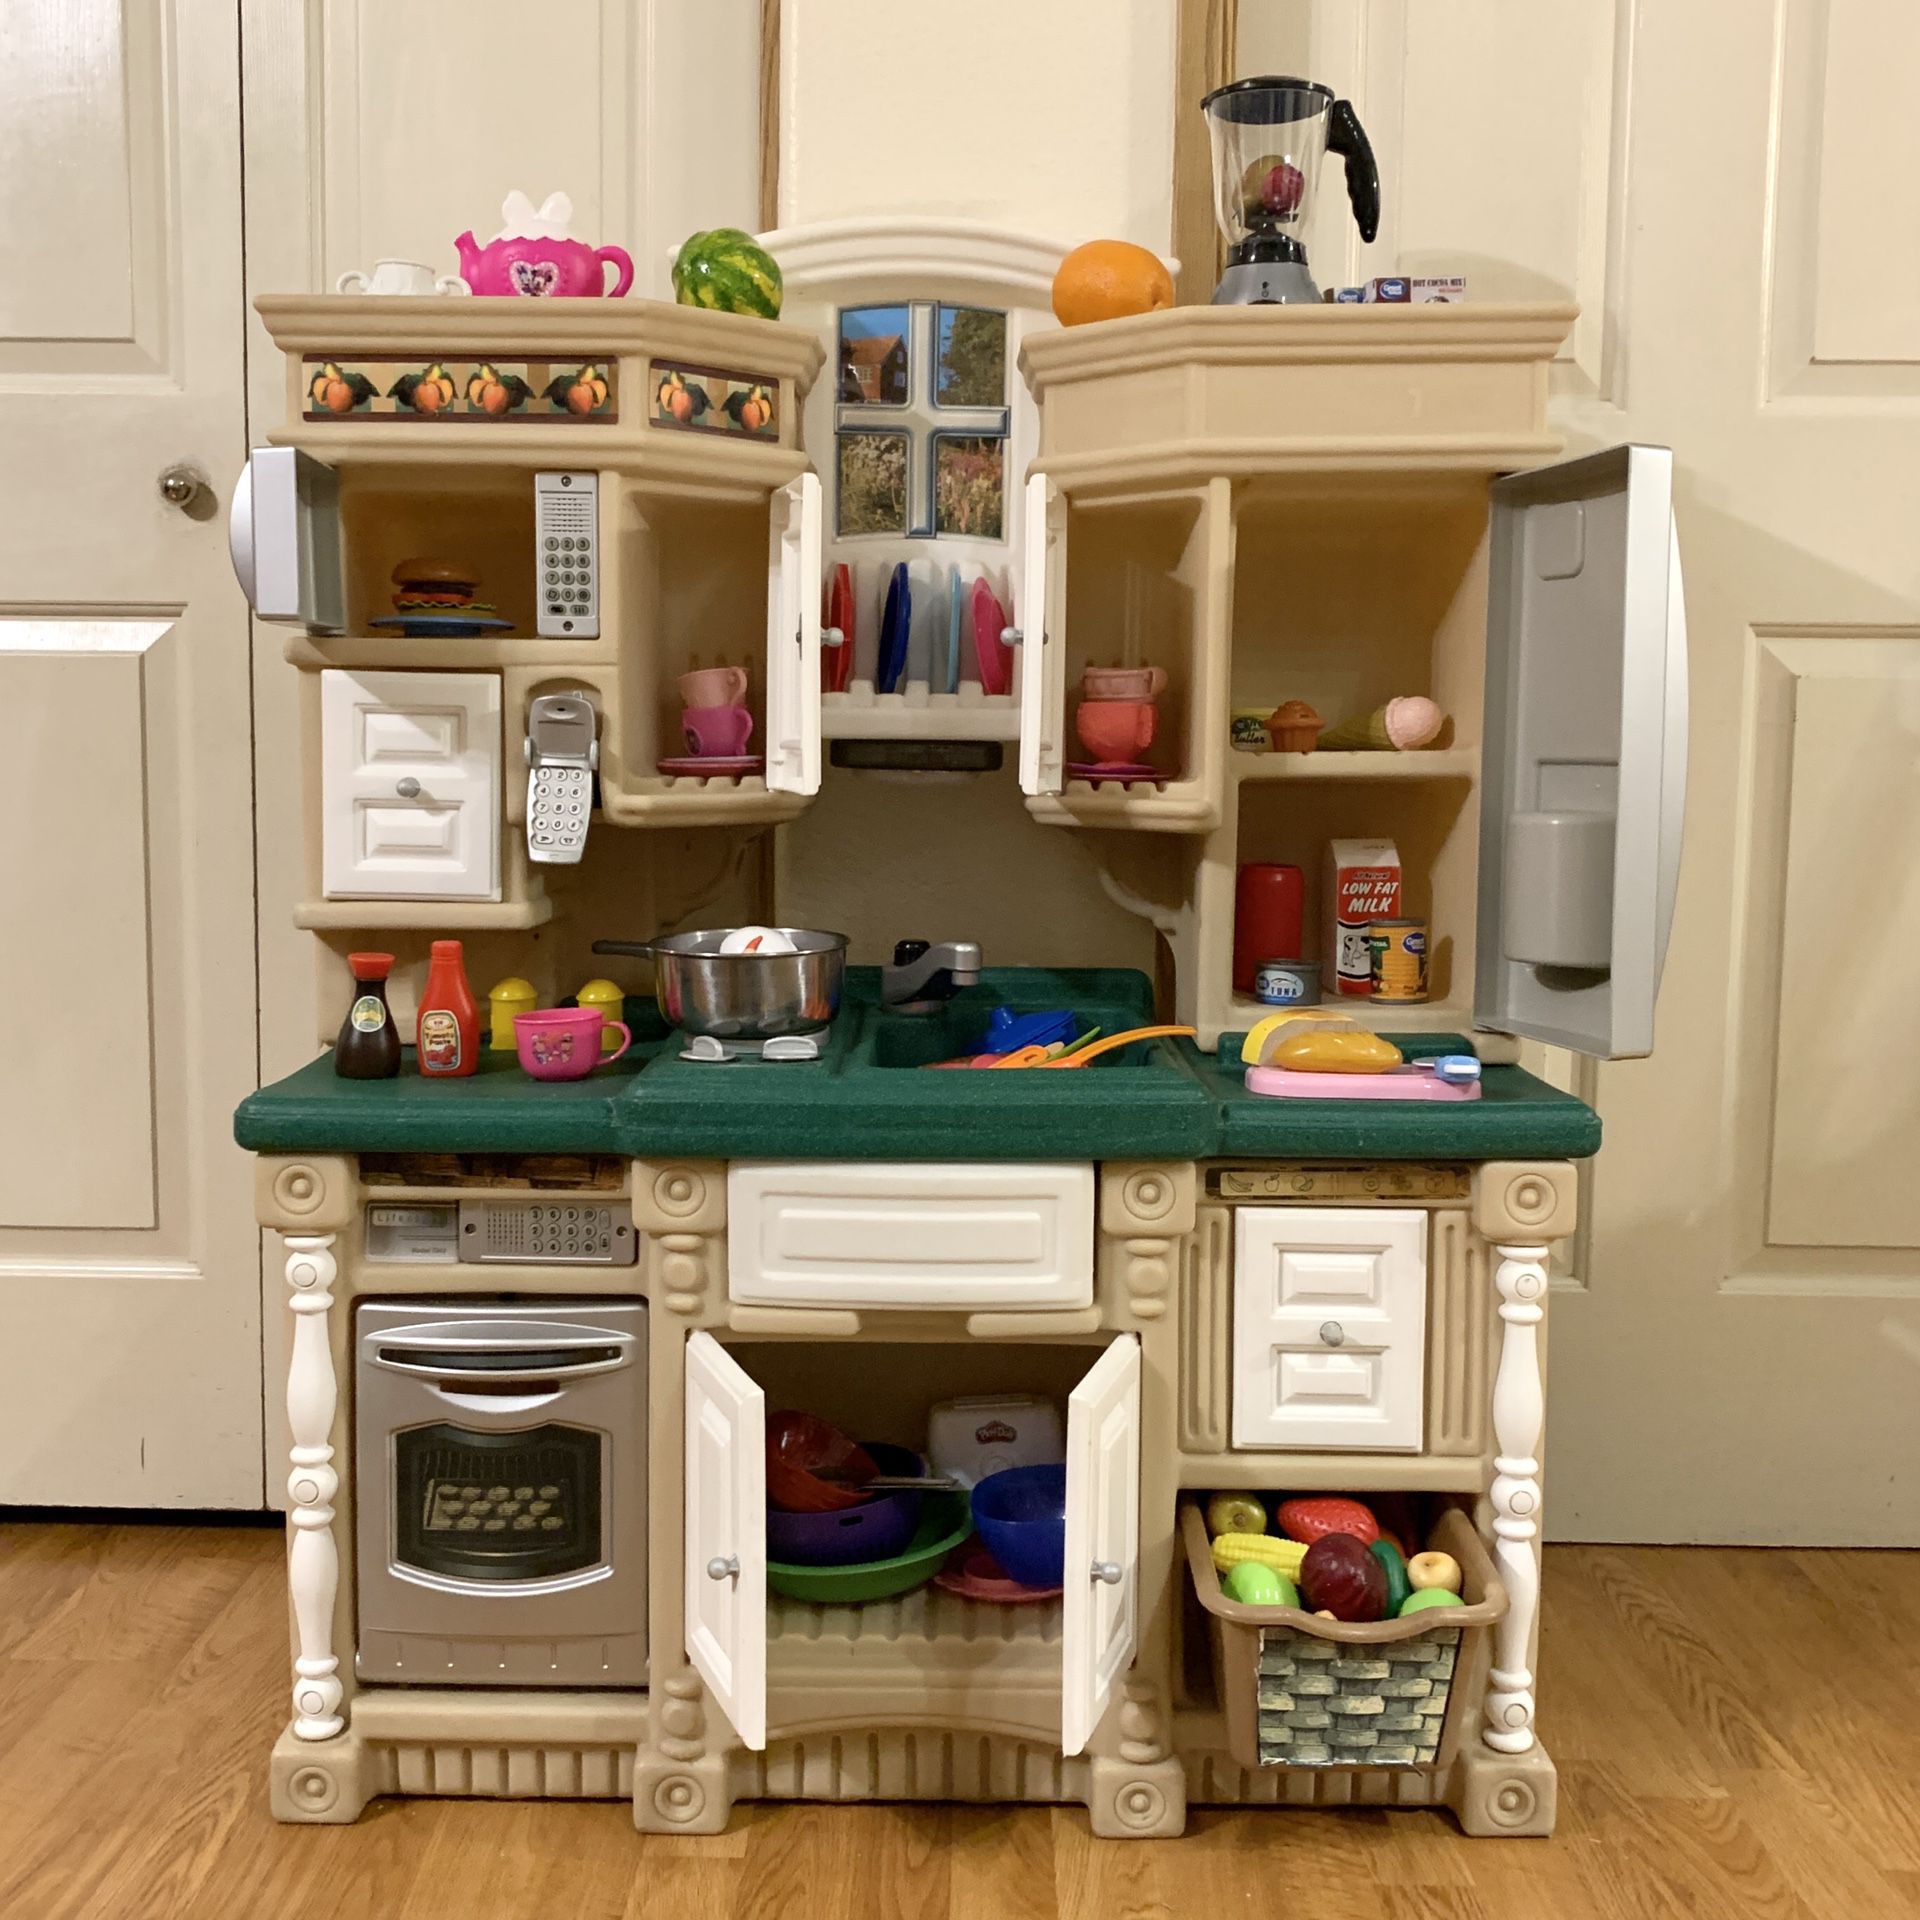 Play kitchen